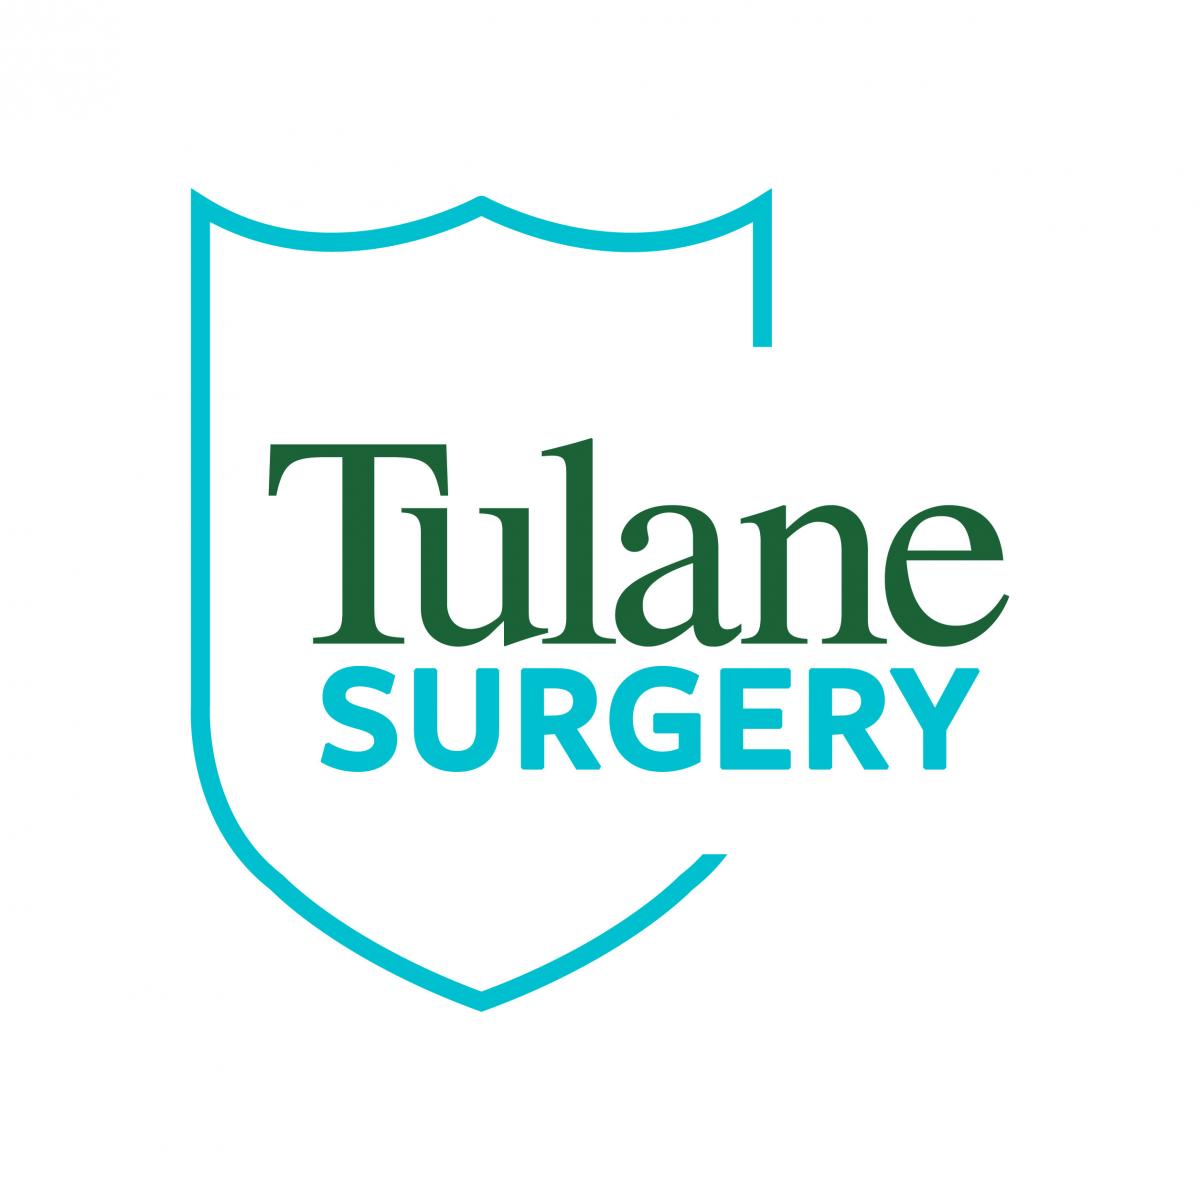 Tulane Surgery logo with crest